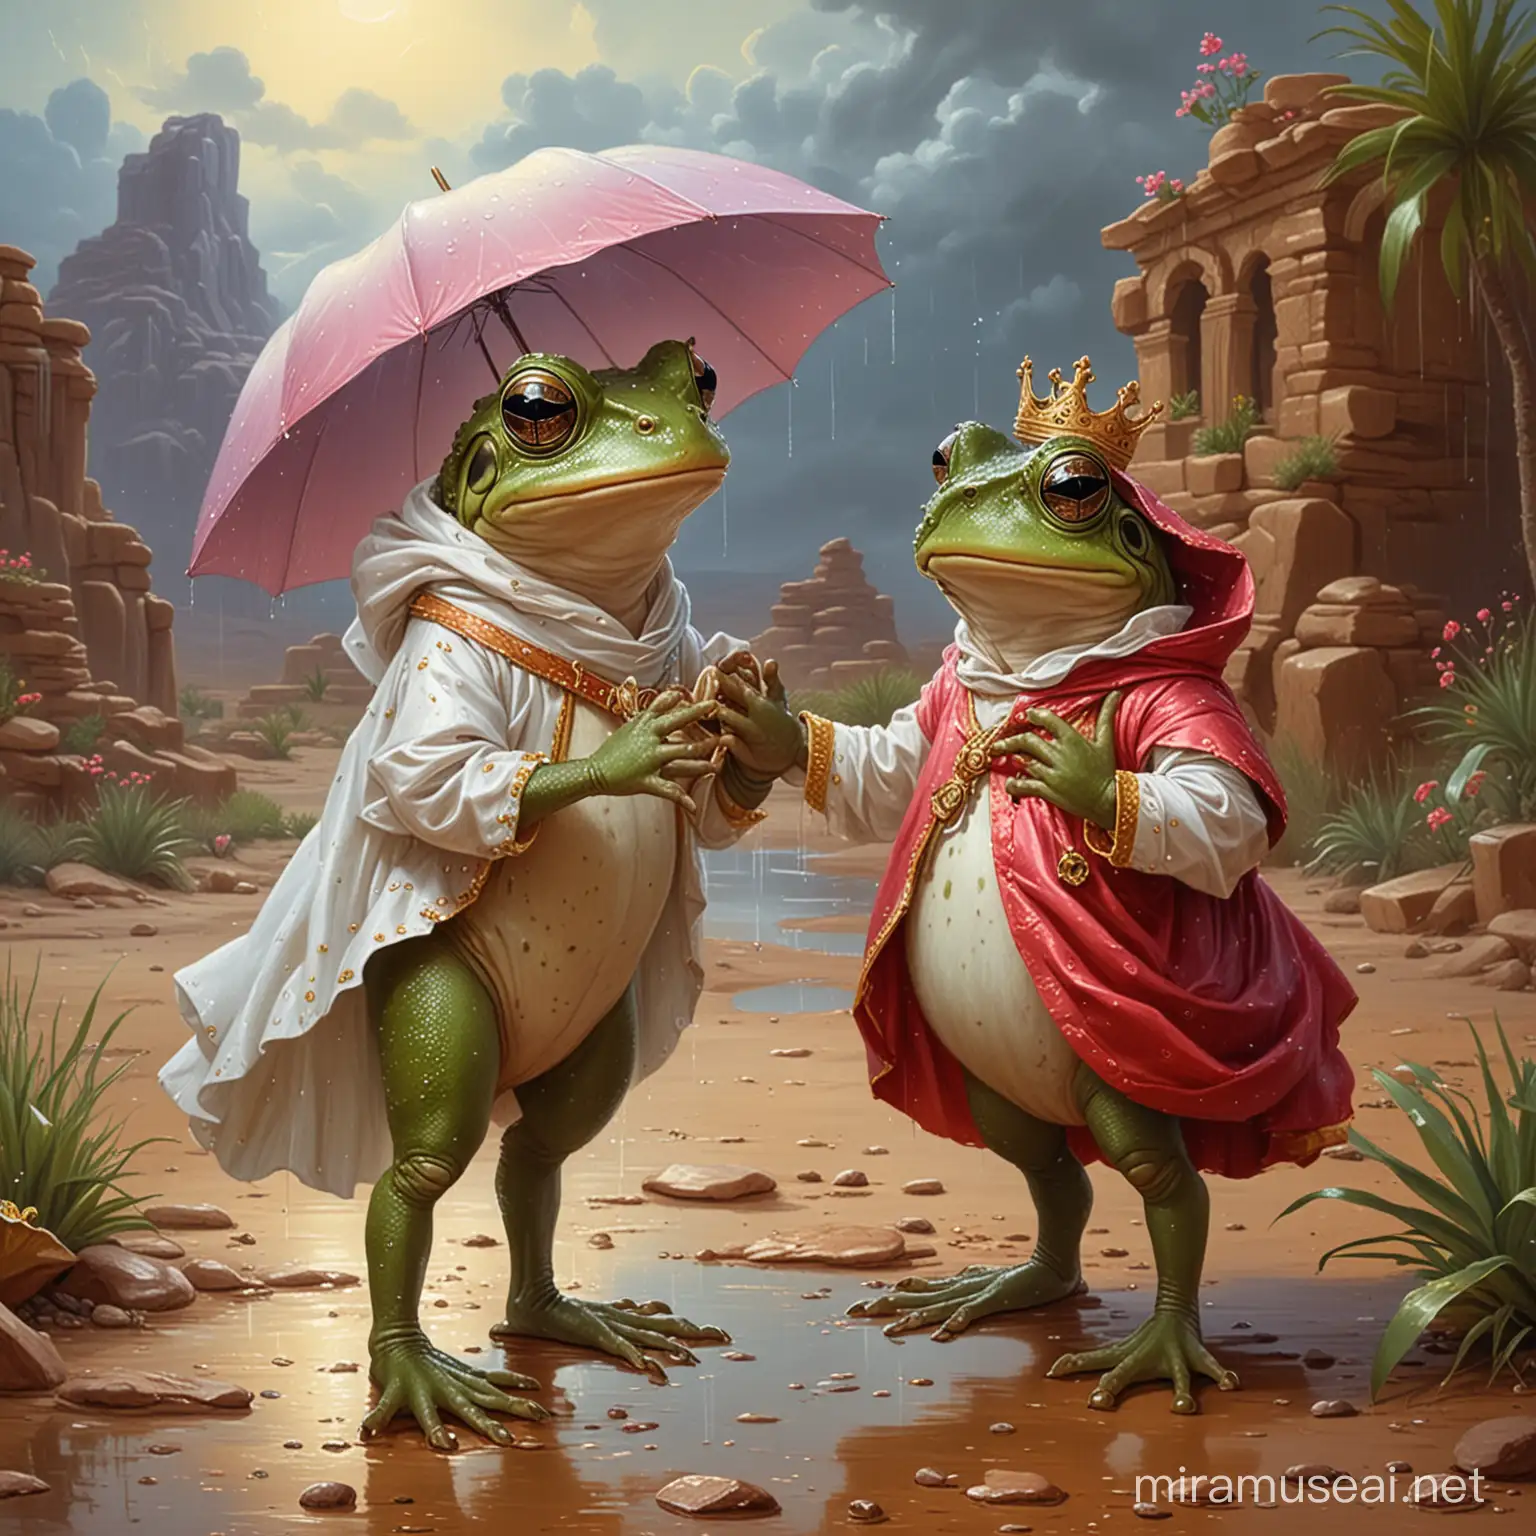 Vintage Cartoon Desert Rain Frogs as Romeo and Juliet in Regal Attire